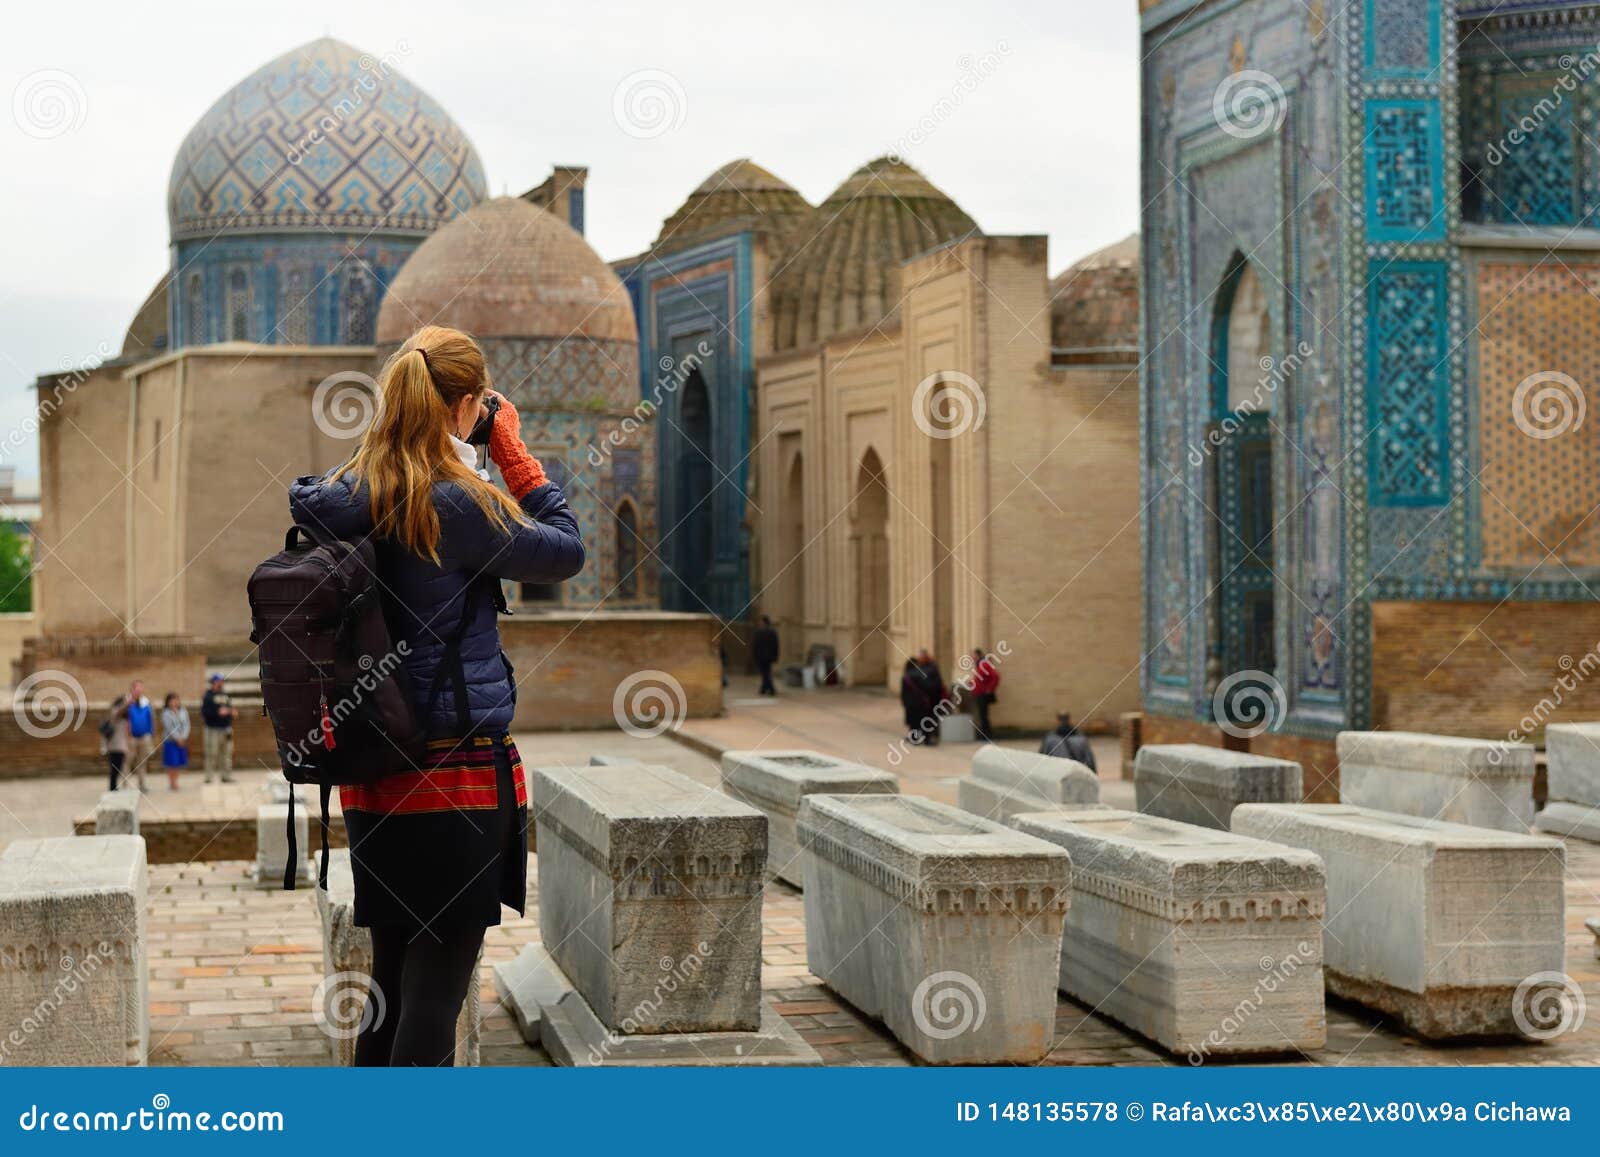 samarkand, uzbekistan